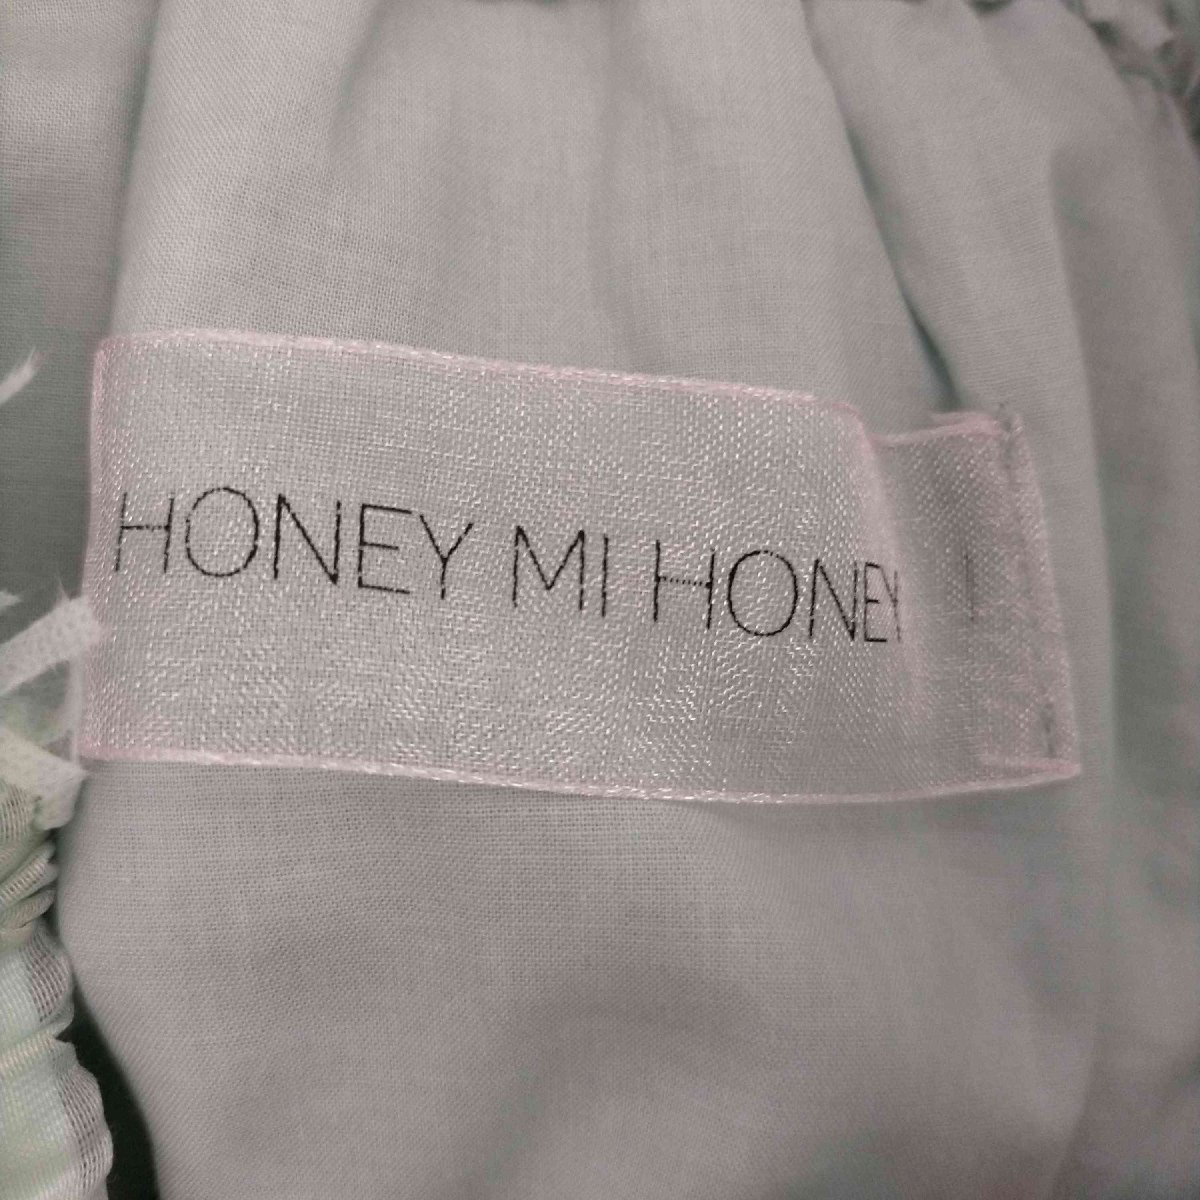 Honey mi Honey(ハニーミーハニー) 23SS two-way fringe organdie 中古 古着 0753_画像6